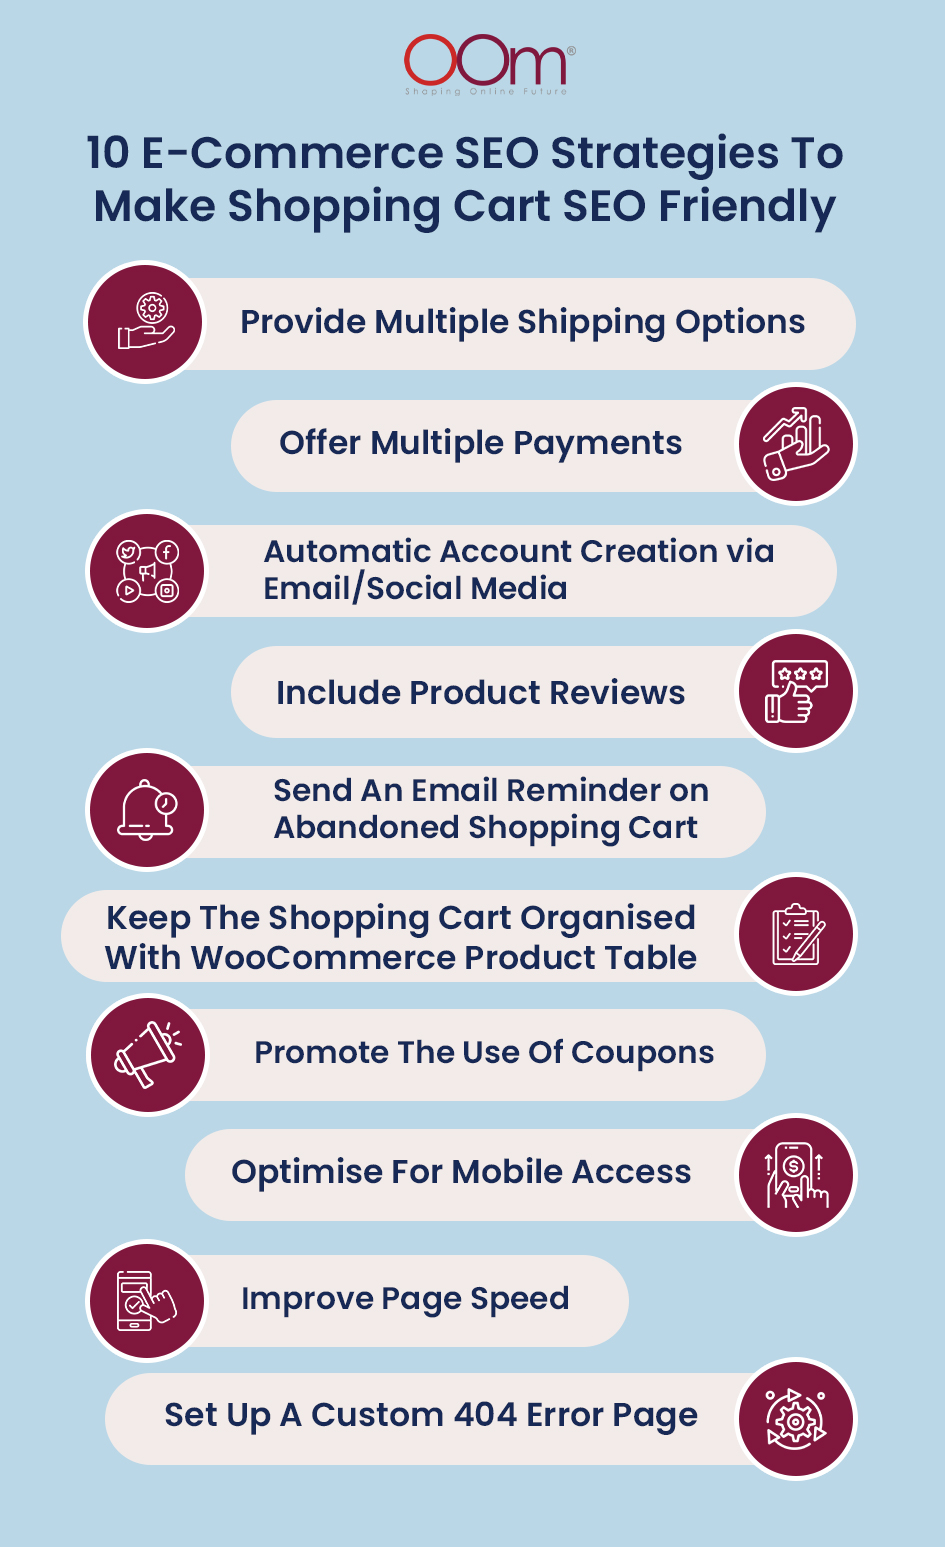 10 E-Commerce SEO Strategies To Make Shopping Cart SEO Friendly